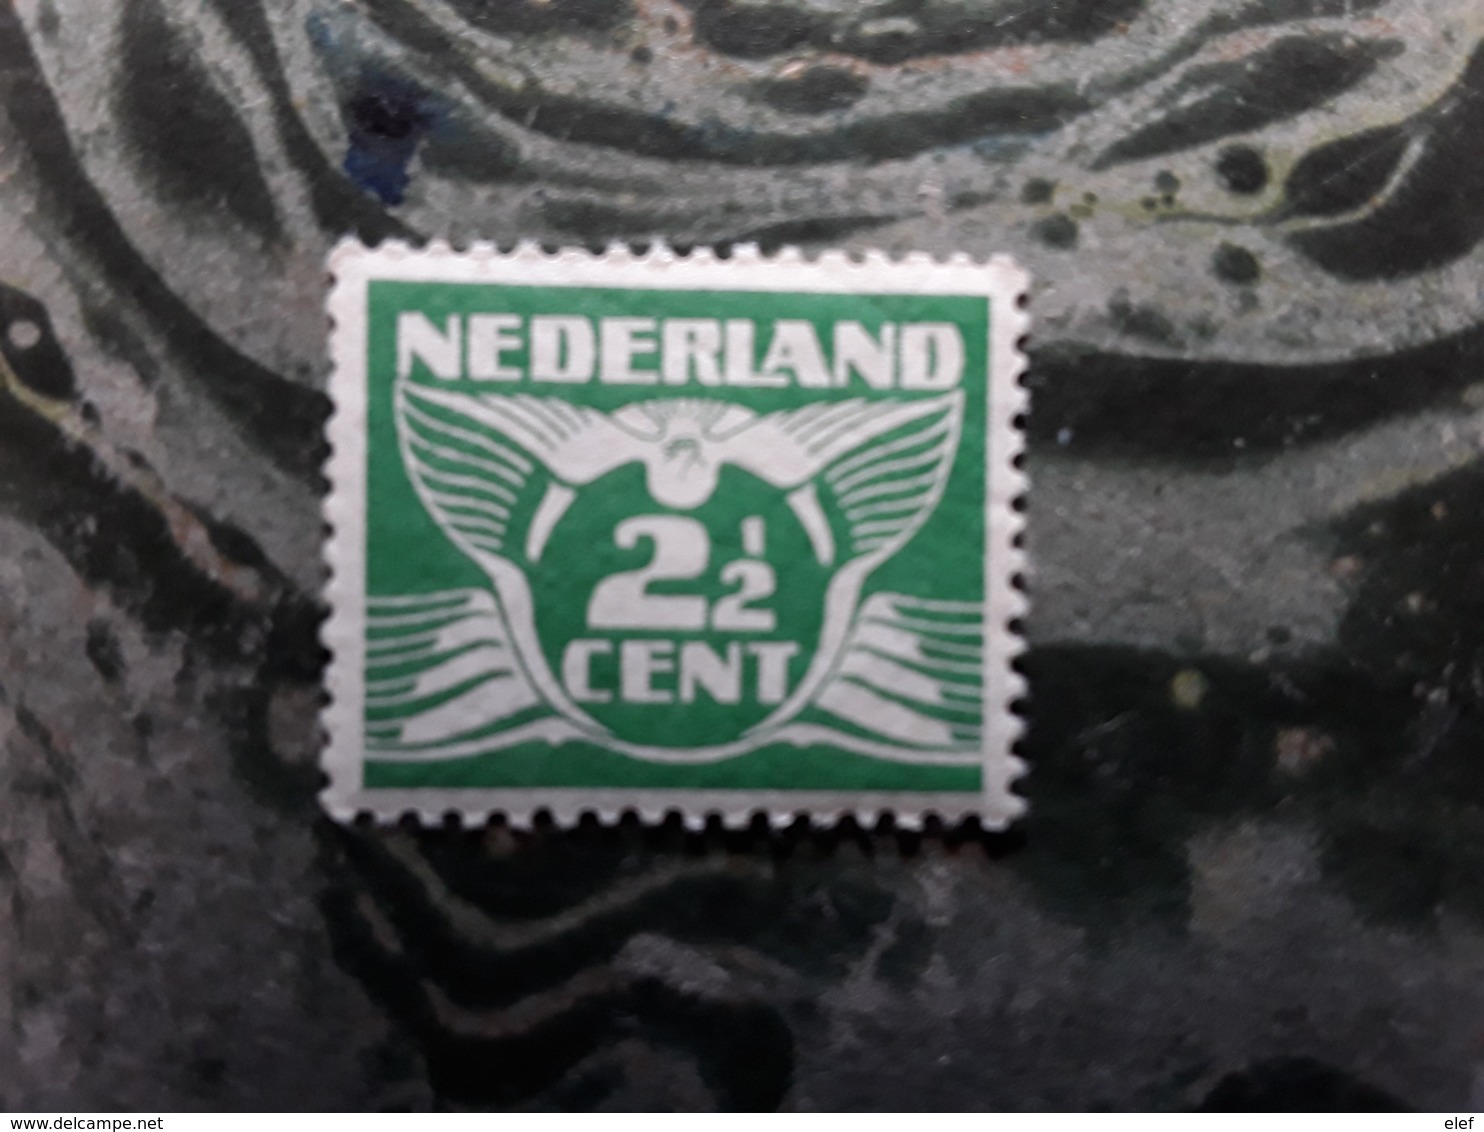 NEDERLAND / Pays Bas / Netherlands ,1926  , Yvert N° 169 , CHIFFRE 2 1/2 C Vert Neuf ** / MNH, TB - Neufs